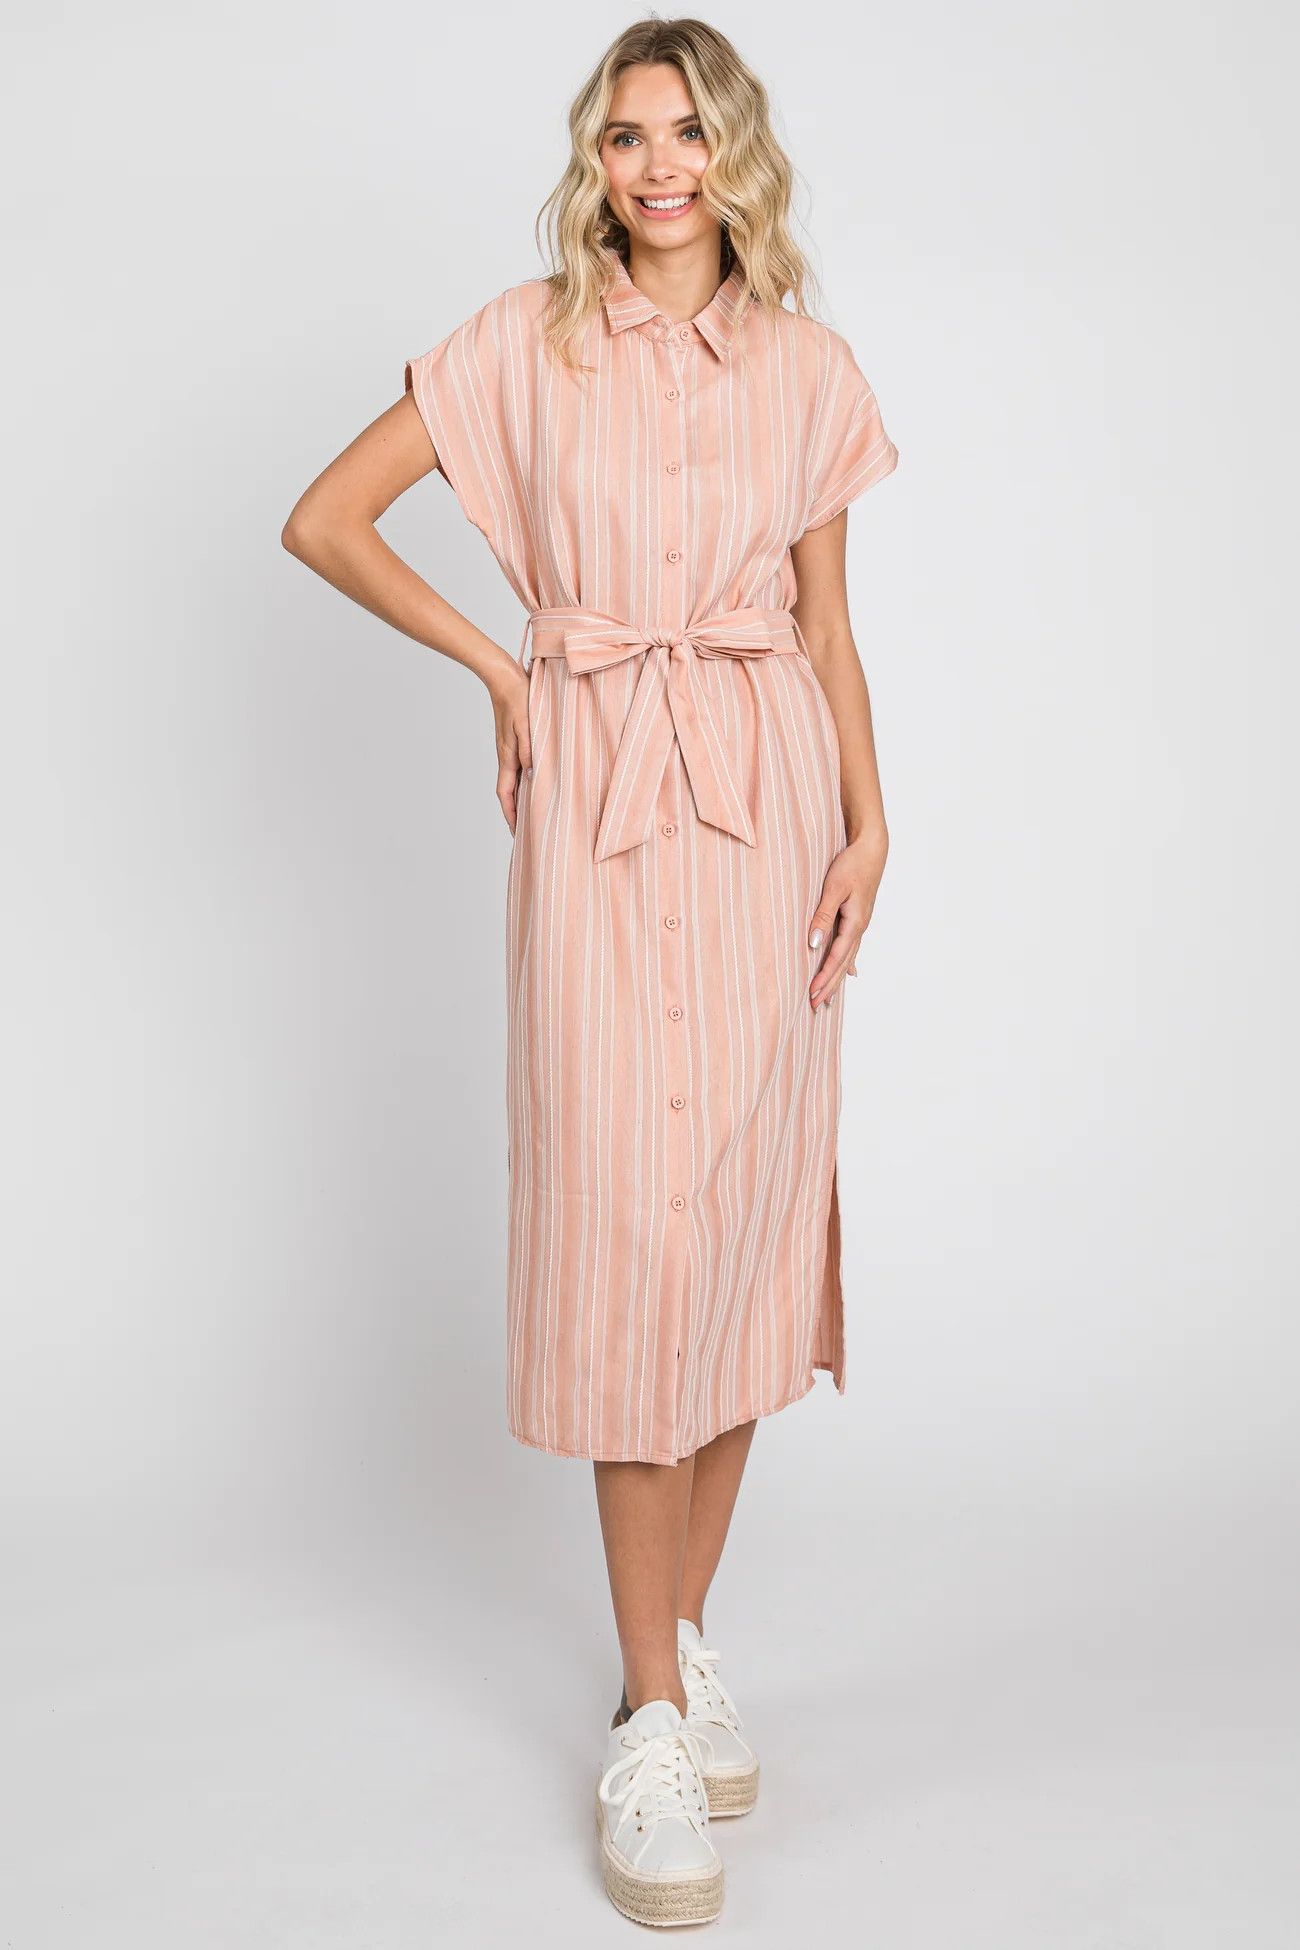 Peach Textured Stripe Button Front Linen Maternity Dress | PinkBlush Maternity